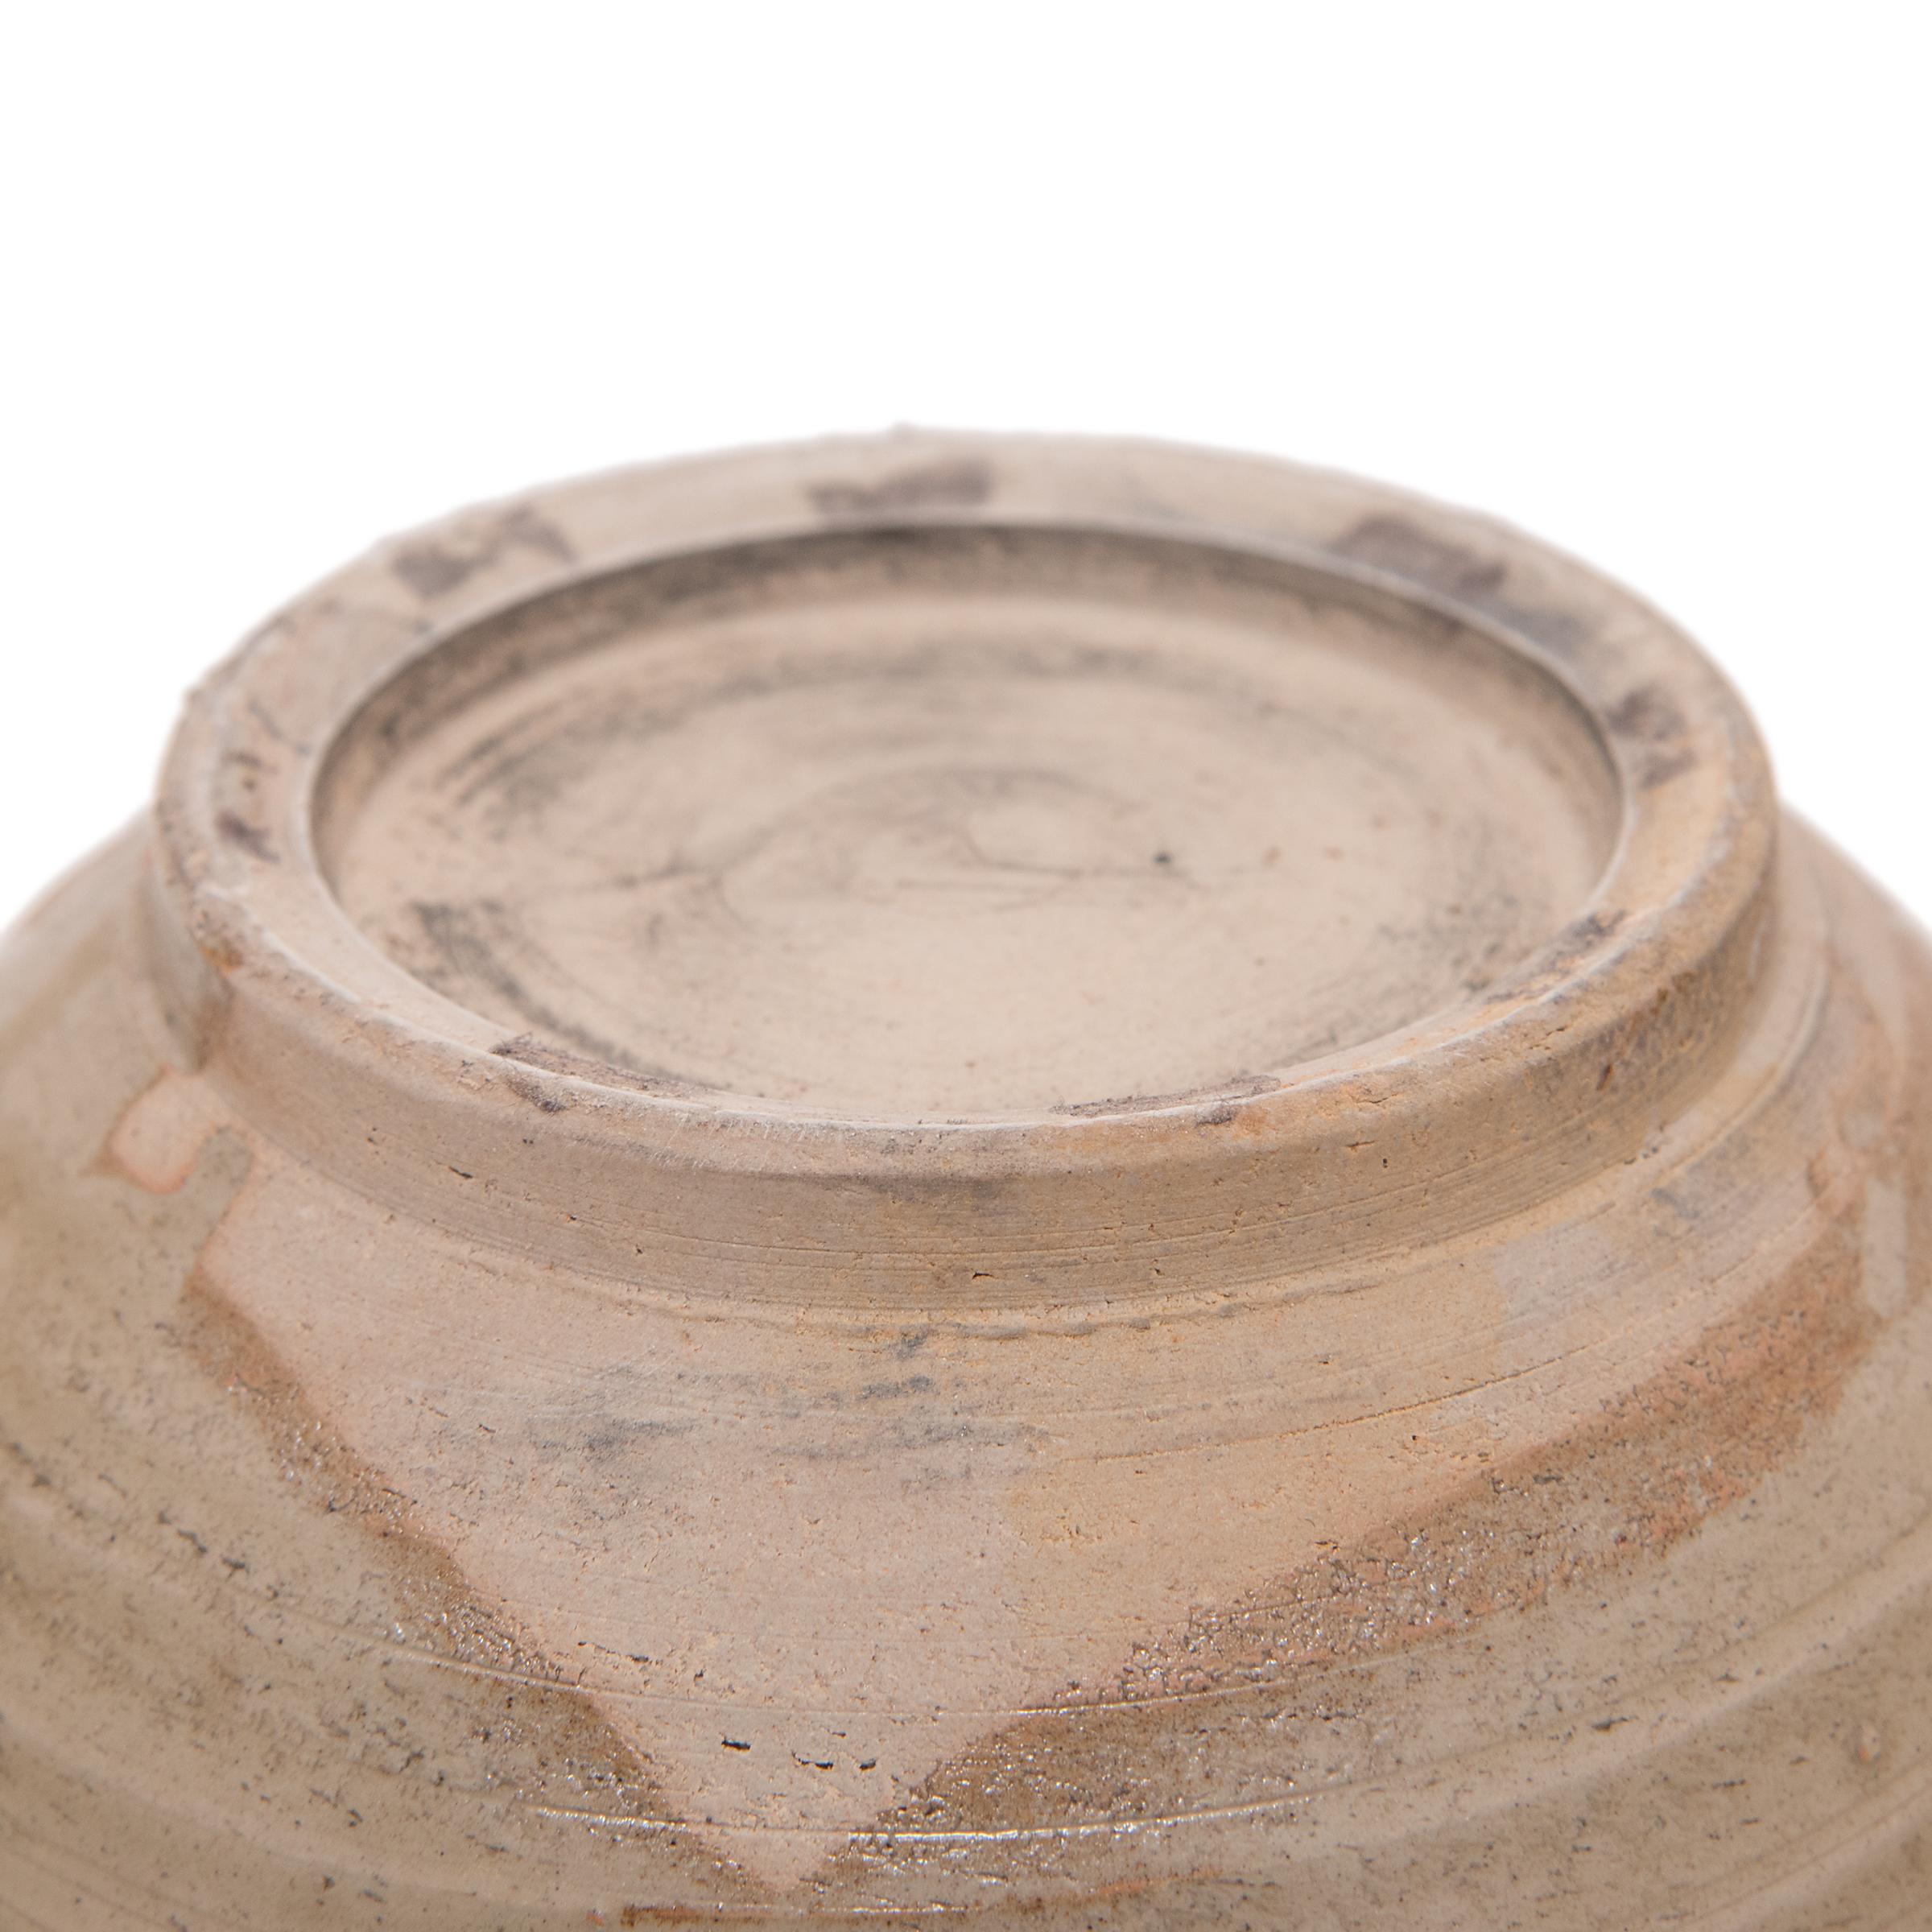 Ceramic Chinese Petite Glazed Kitchen Jar, c. 1850